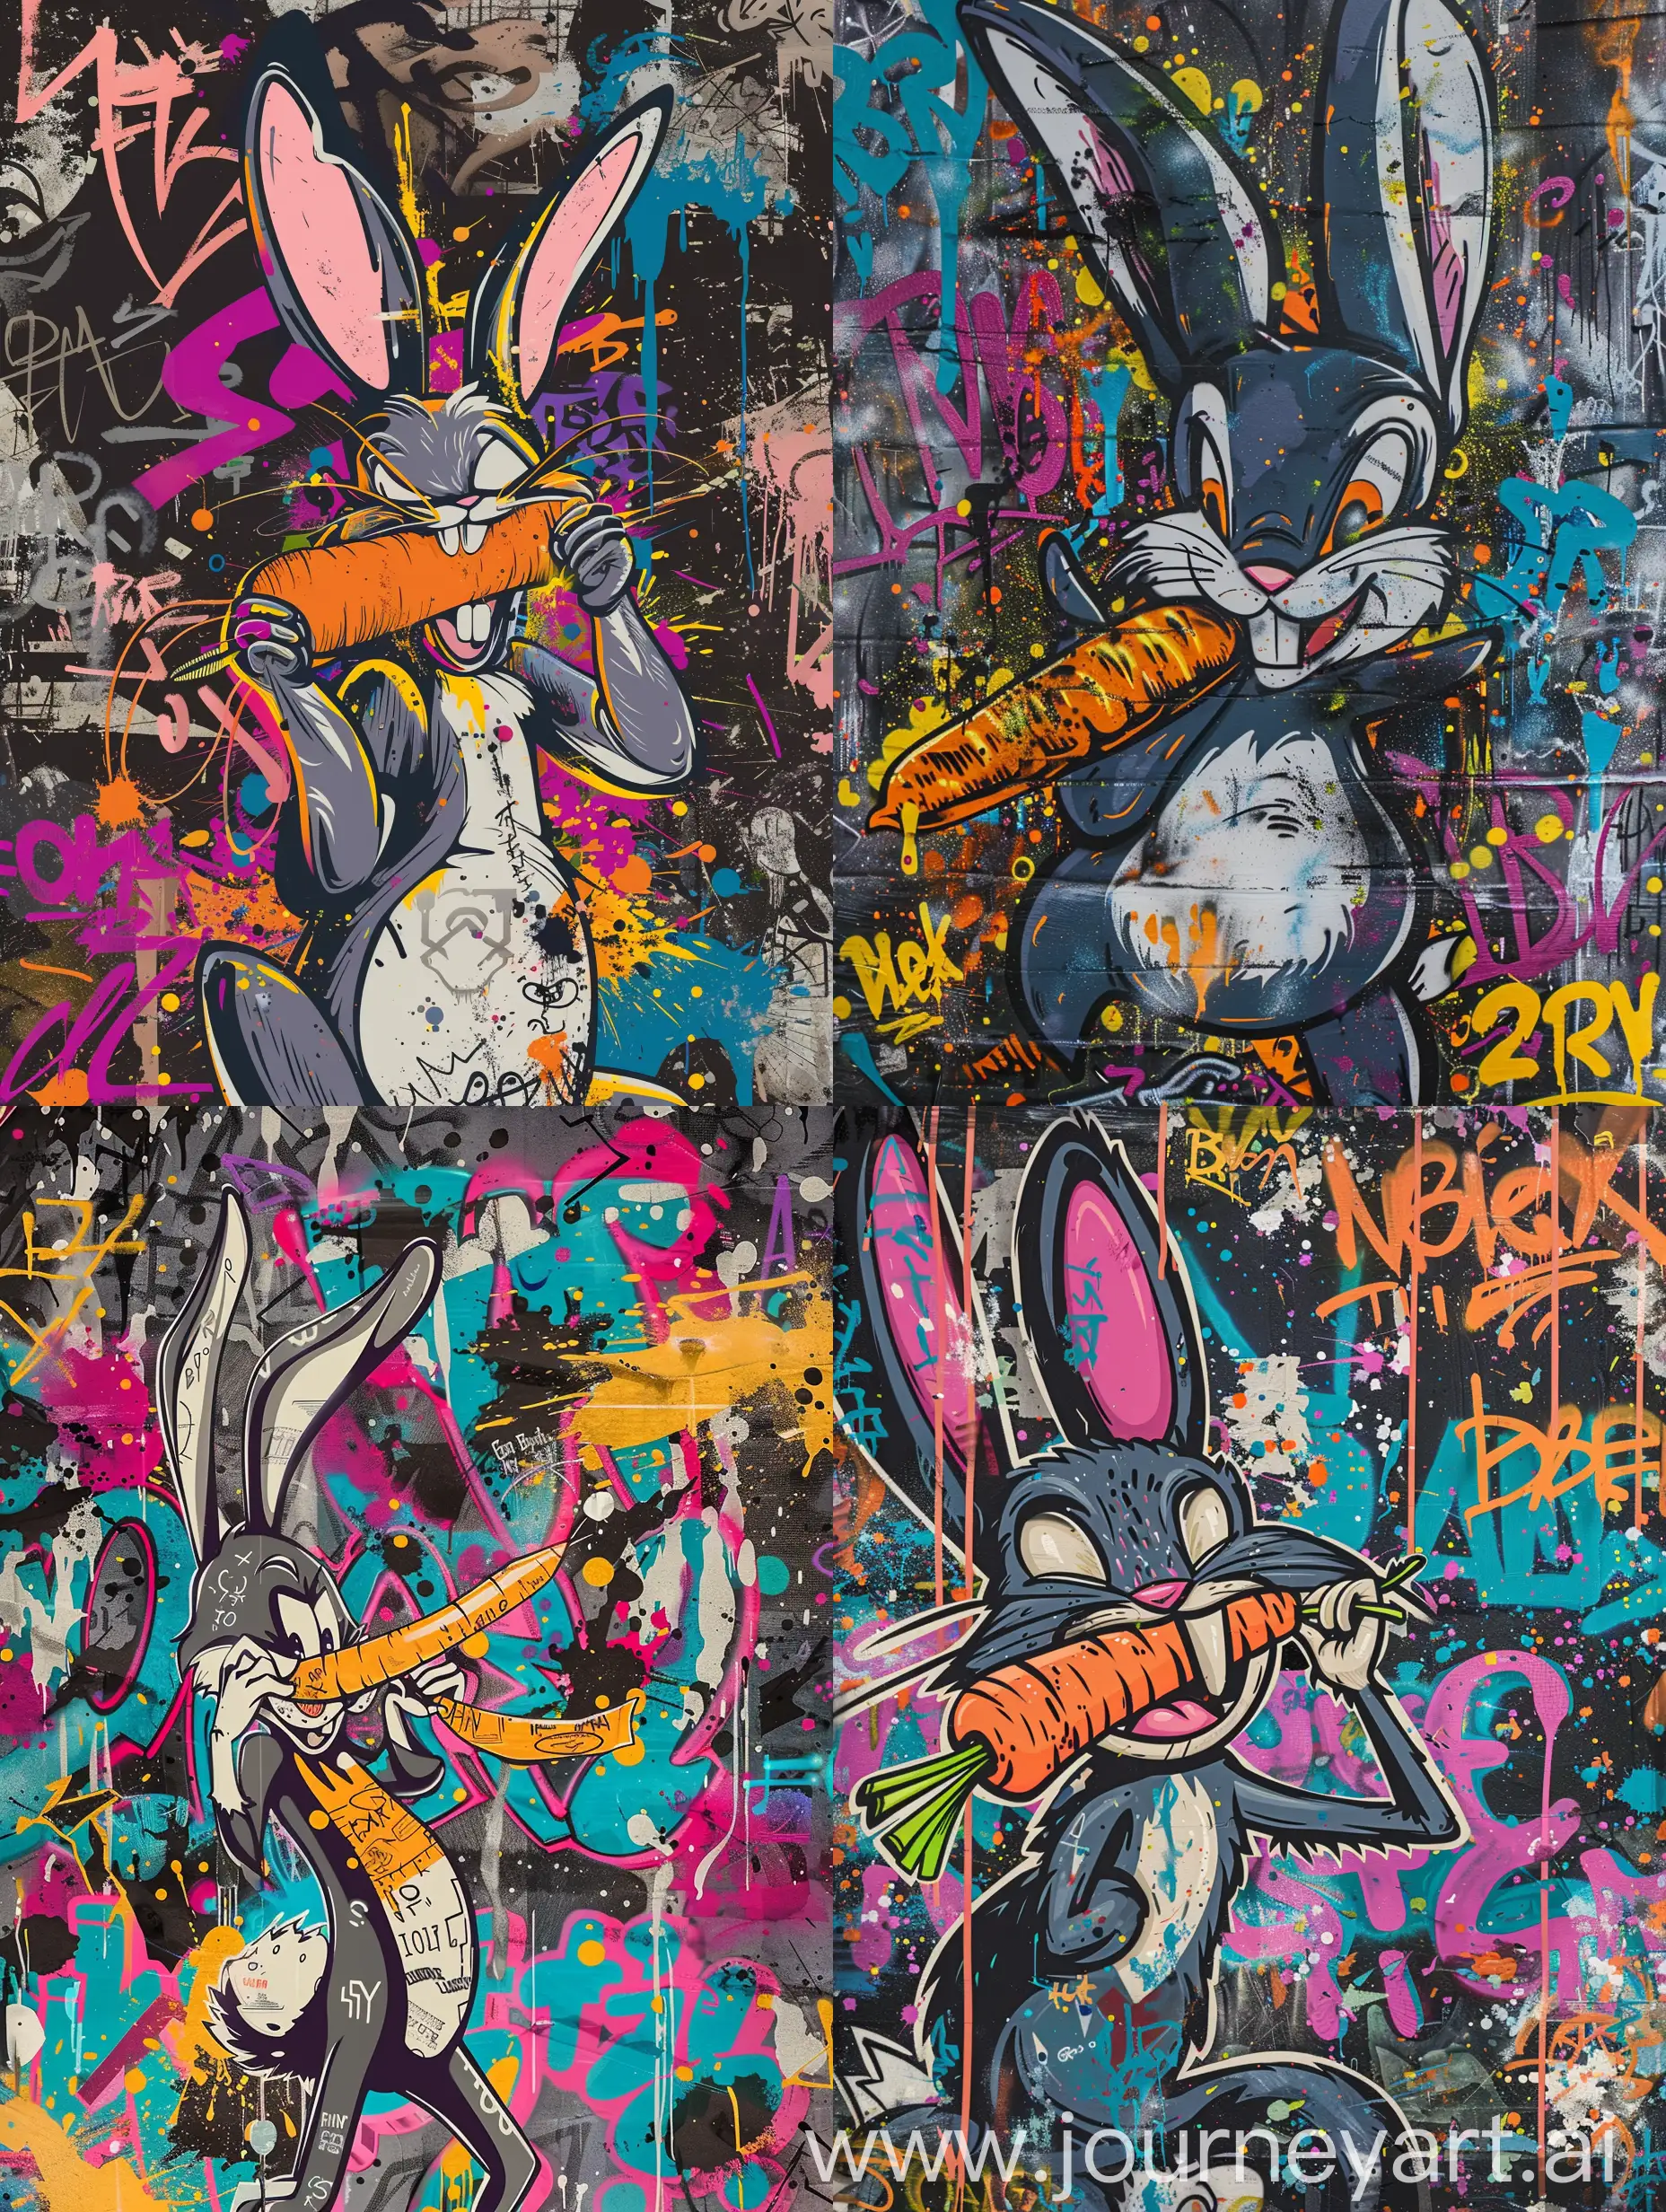 flat illustration graffiti on cava:2, Fantasy illustration of bugs bunny eating a carrot, graffiti, traditional vibrant, urban, detailed, tag, background full of dark paint splash and graffiti text, random sized graffiti text all over typography:2, urban, neo futuristic, scary galaxy, canva texture